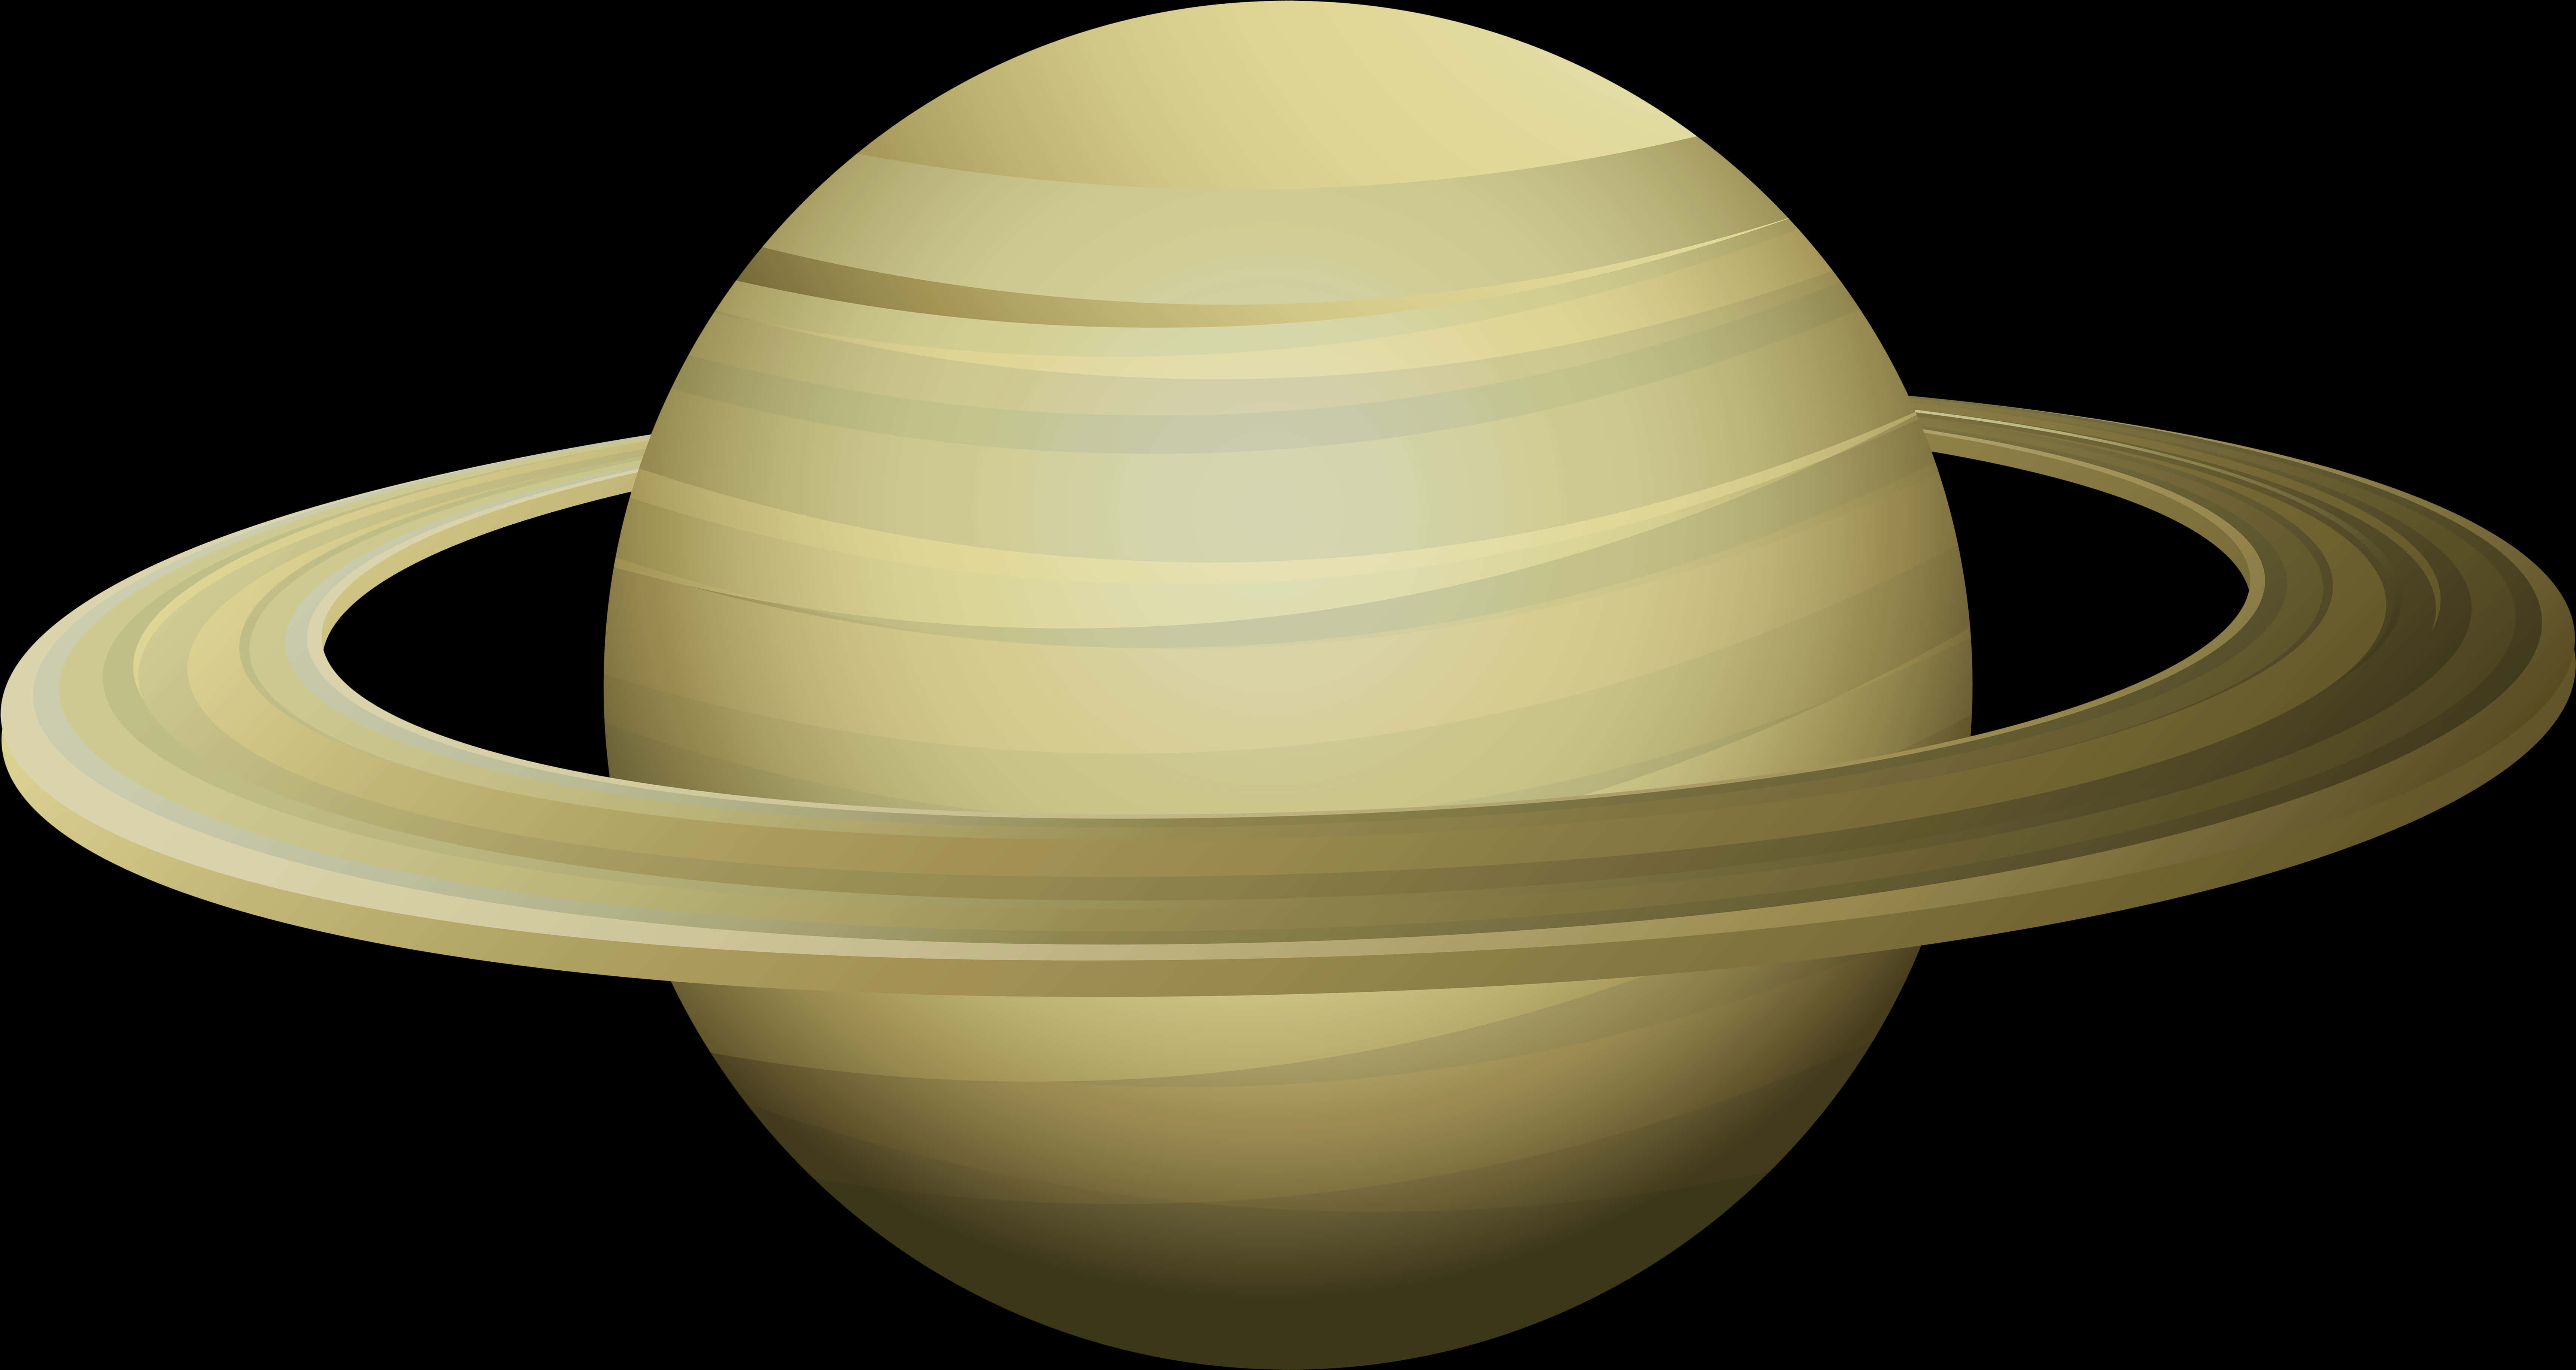 Saturn Planet Rings Illustration PNG image